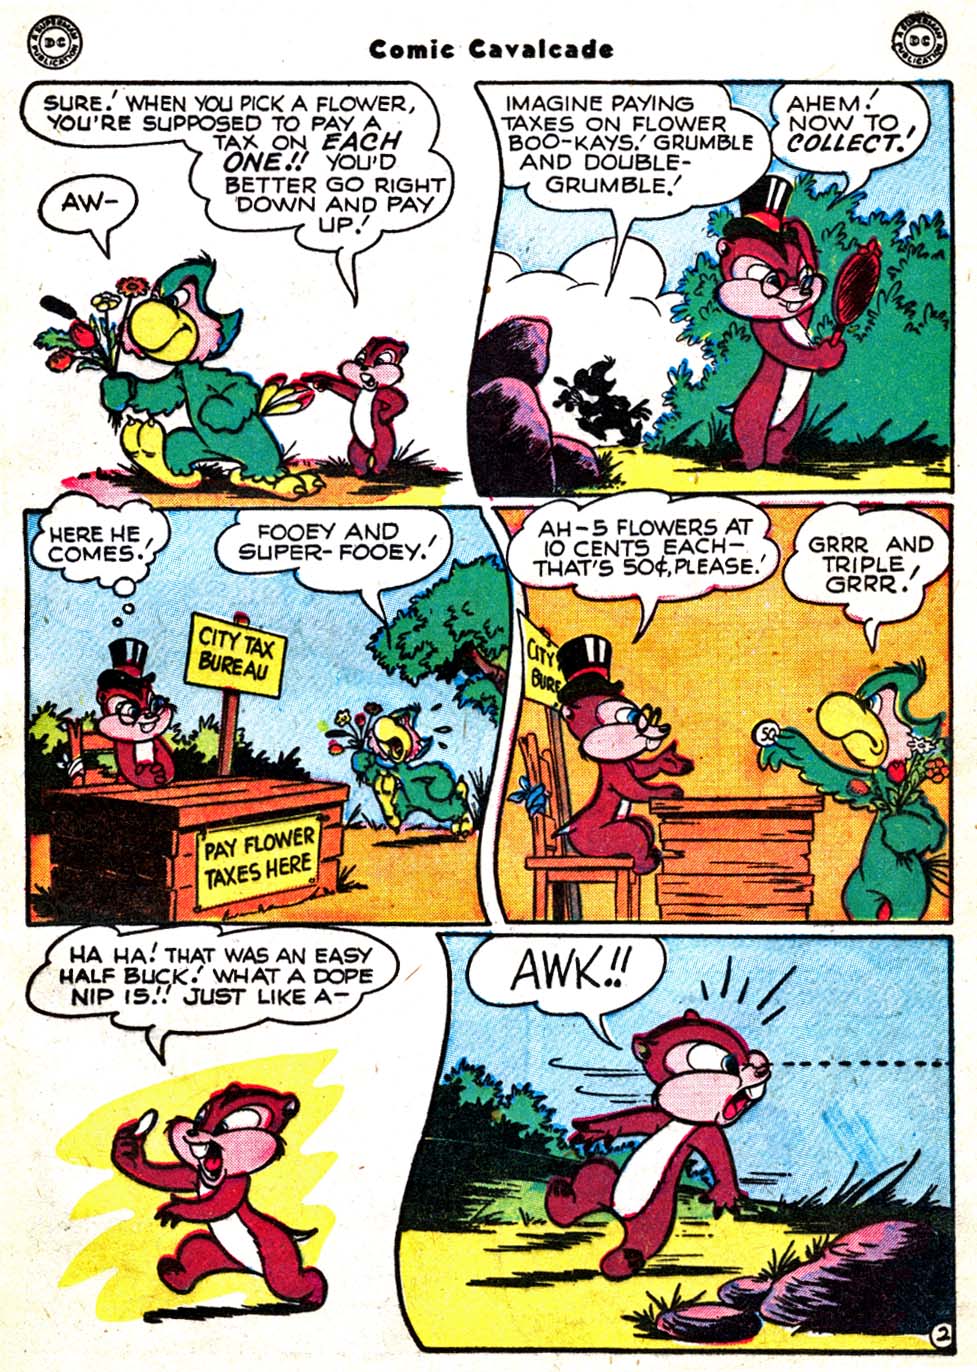 Comic Cavalcade issue 31 - Page 61